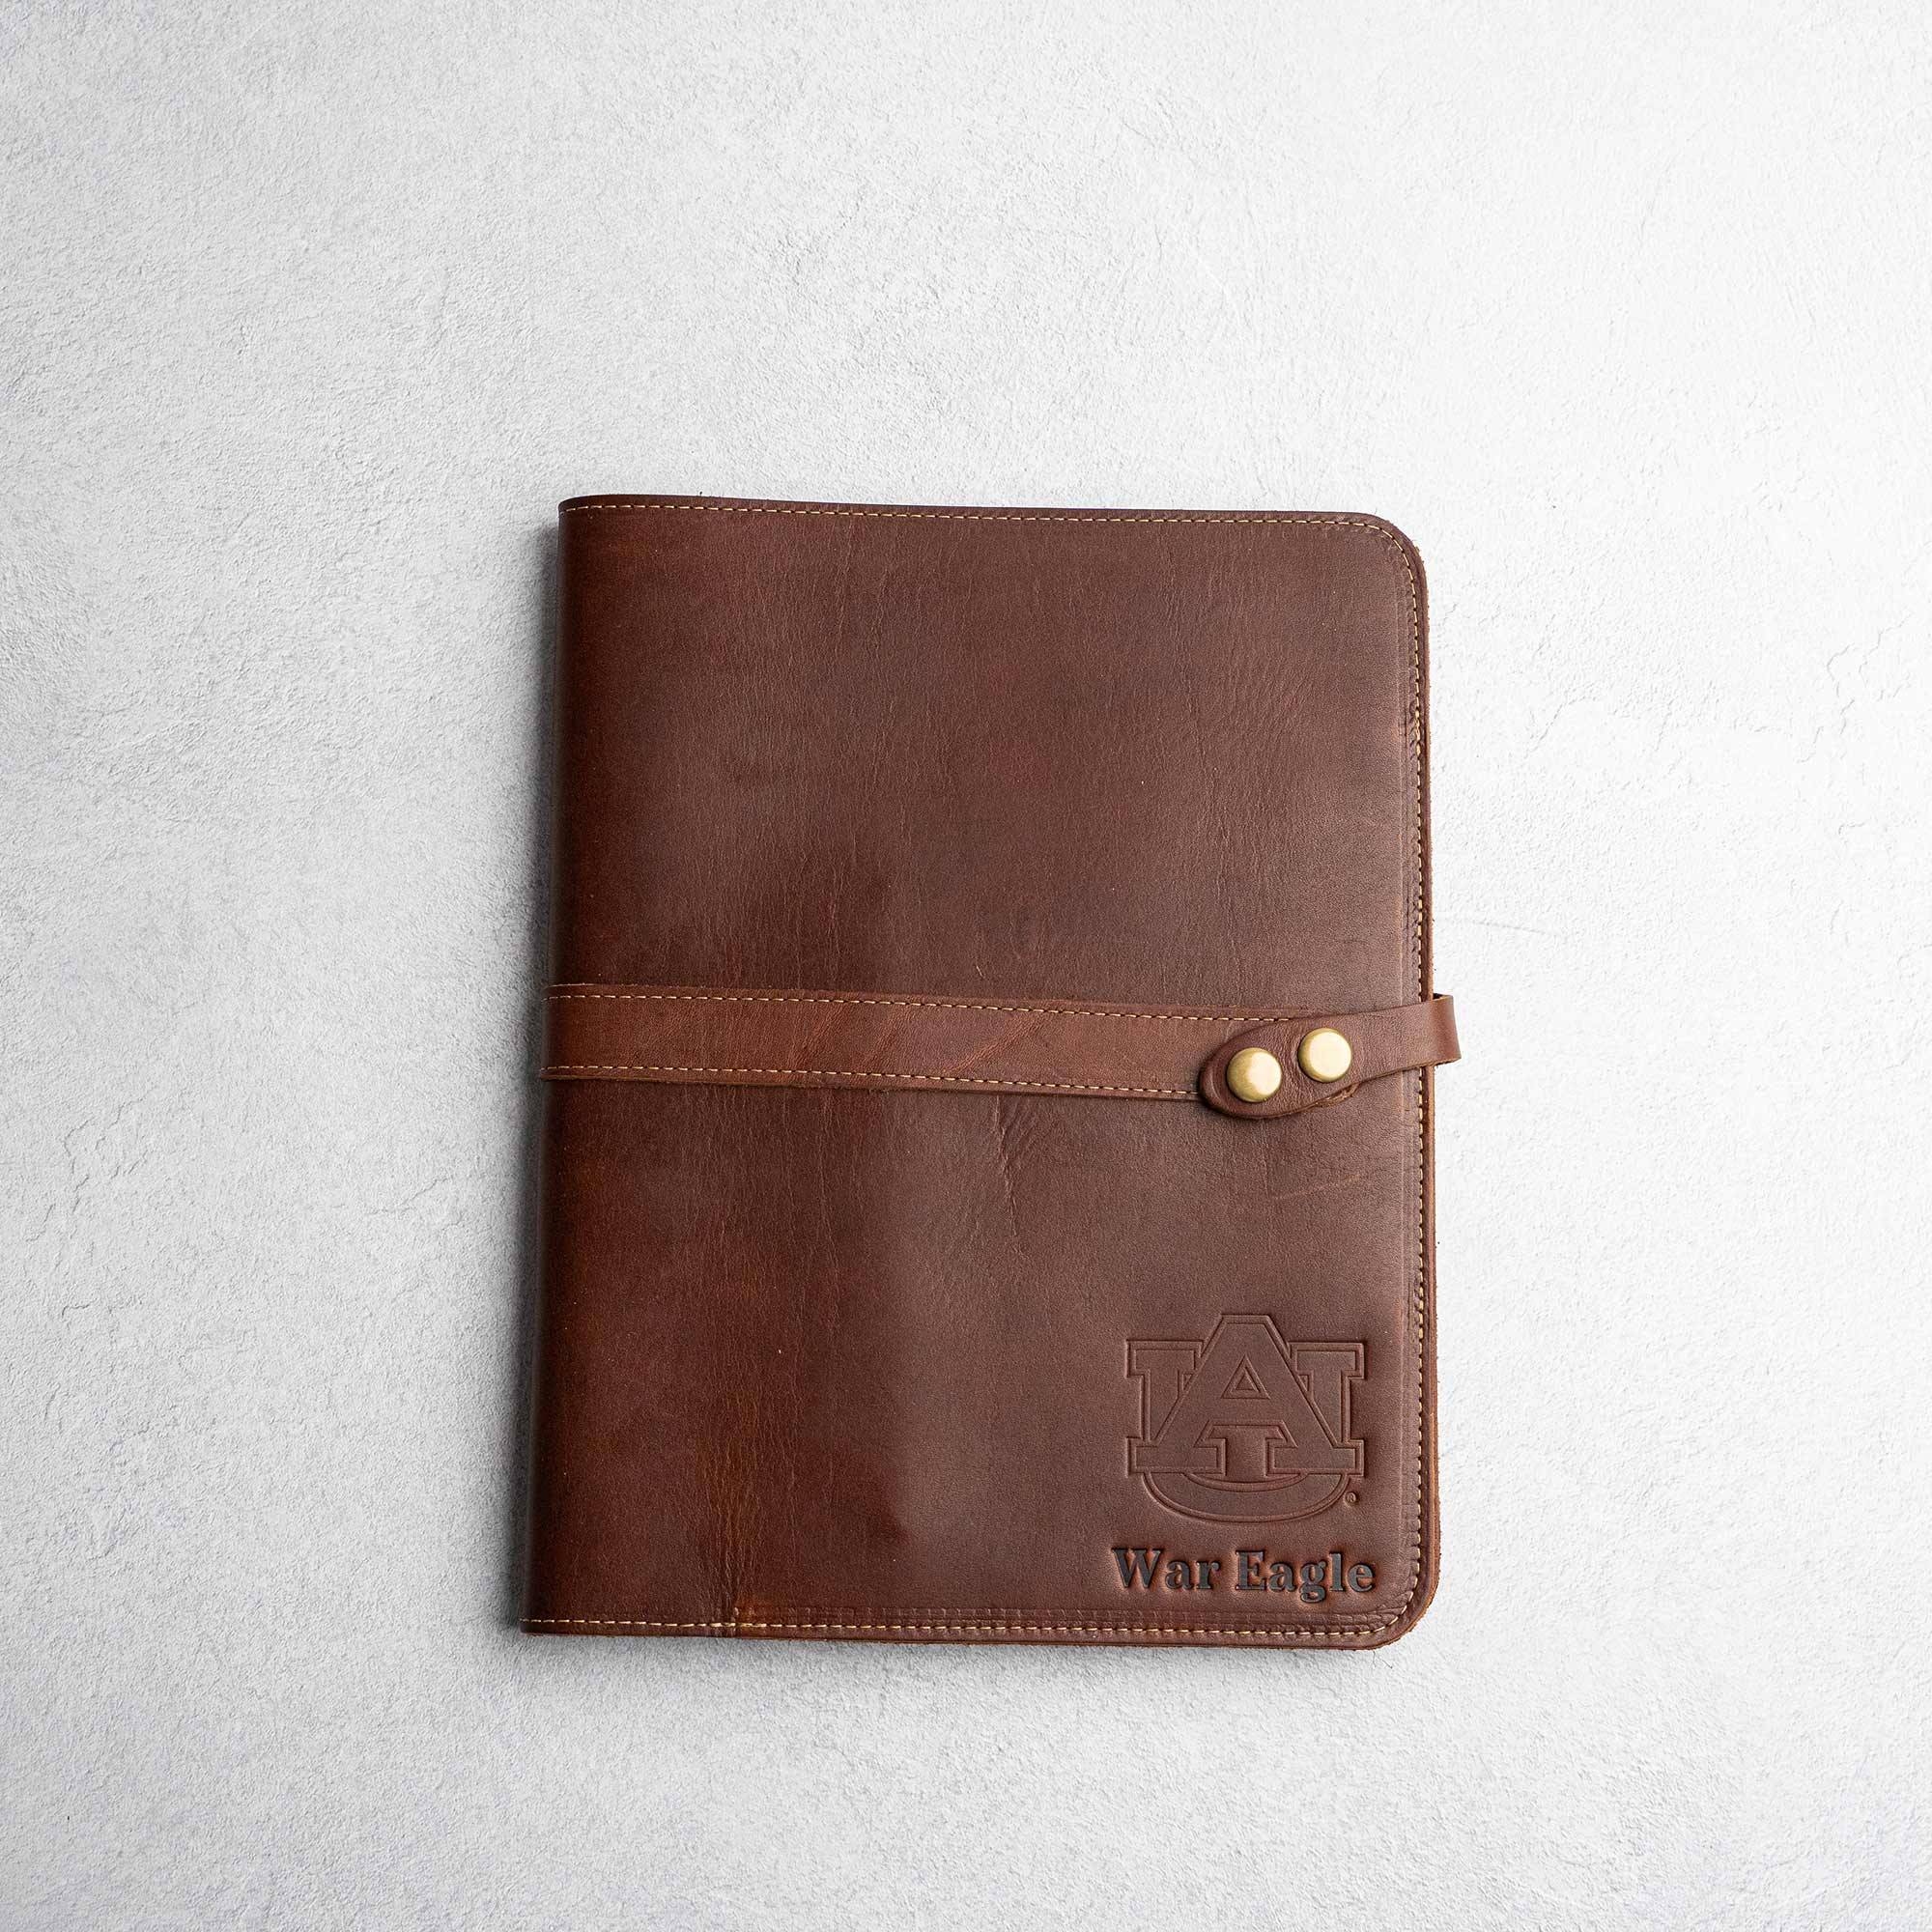 Fine leather padfolio/portfolio with Auburn University logo